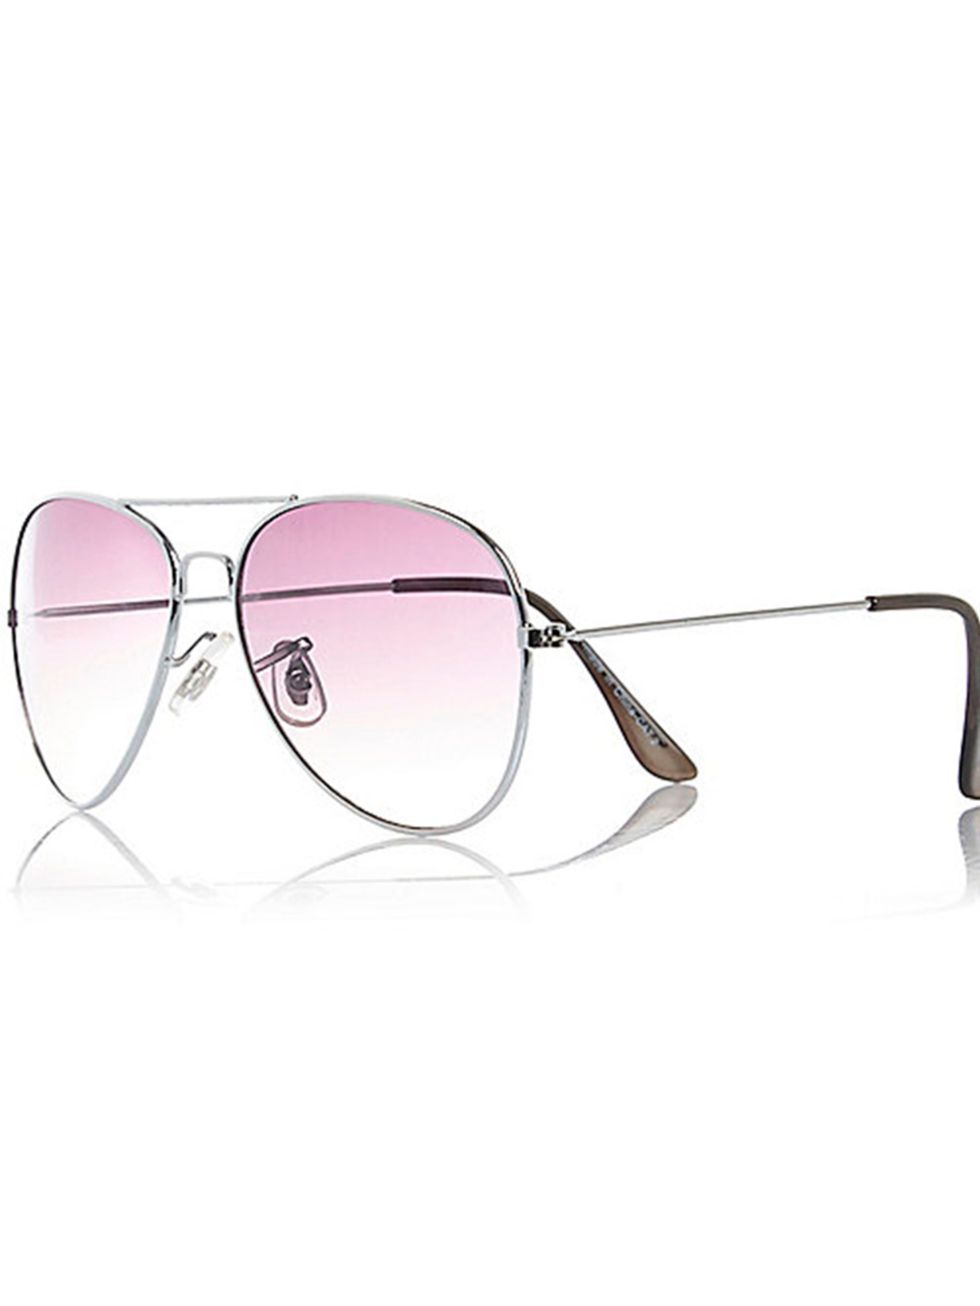 <p><a href="http://www.riverisland.com/men/sunglasses/aviator-sunglasses/silver-tone-aviator-style-sunglasses-283191" target="_blank">River Island</a> sunglasses, £10</p>